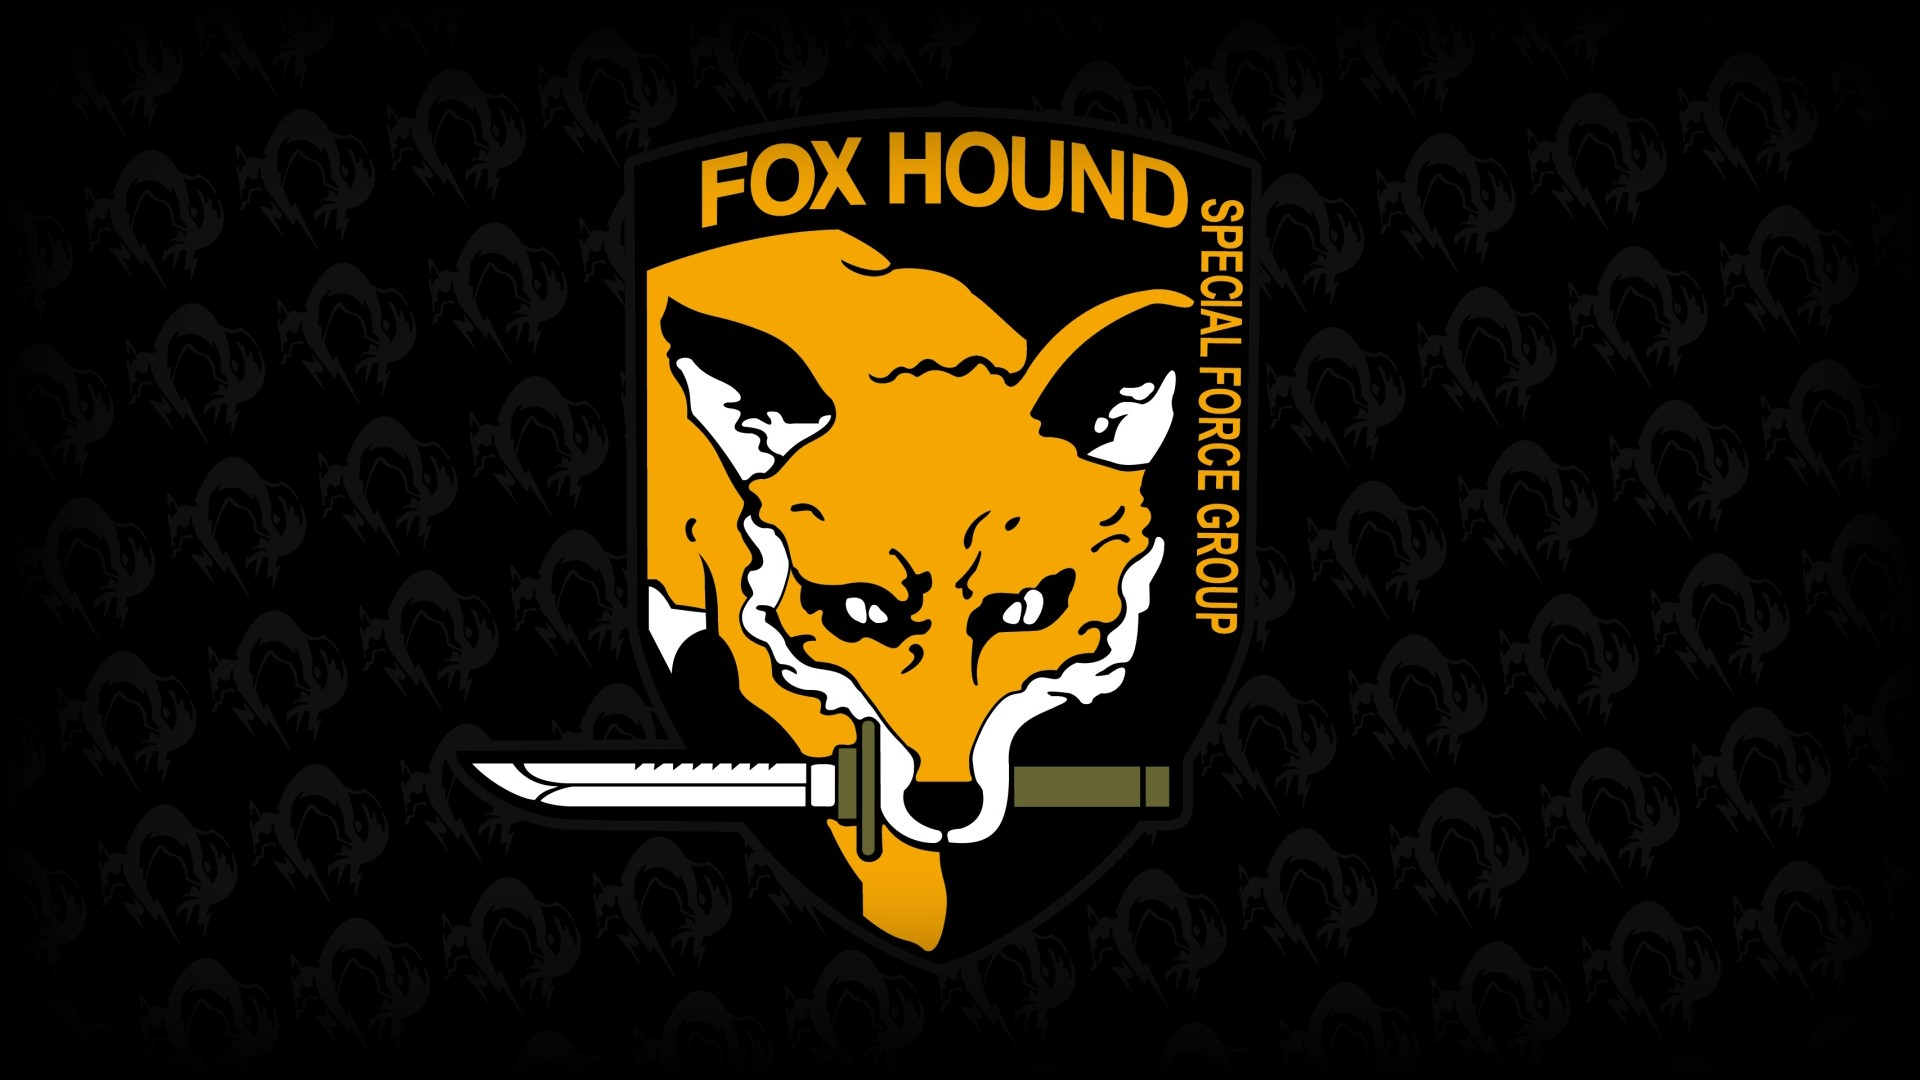 Fox hound. Foxhound MGS 5. Metal Gear Solid Foxhound. Foxhound метал Гир Солид. Foxhound Metal Gear нашивка.